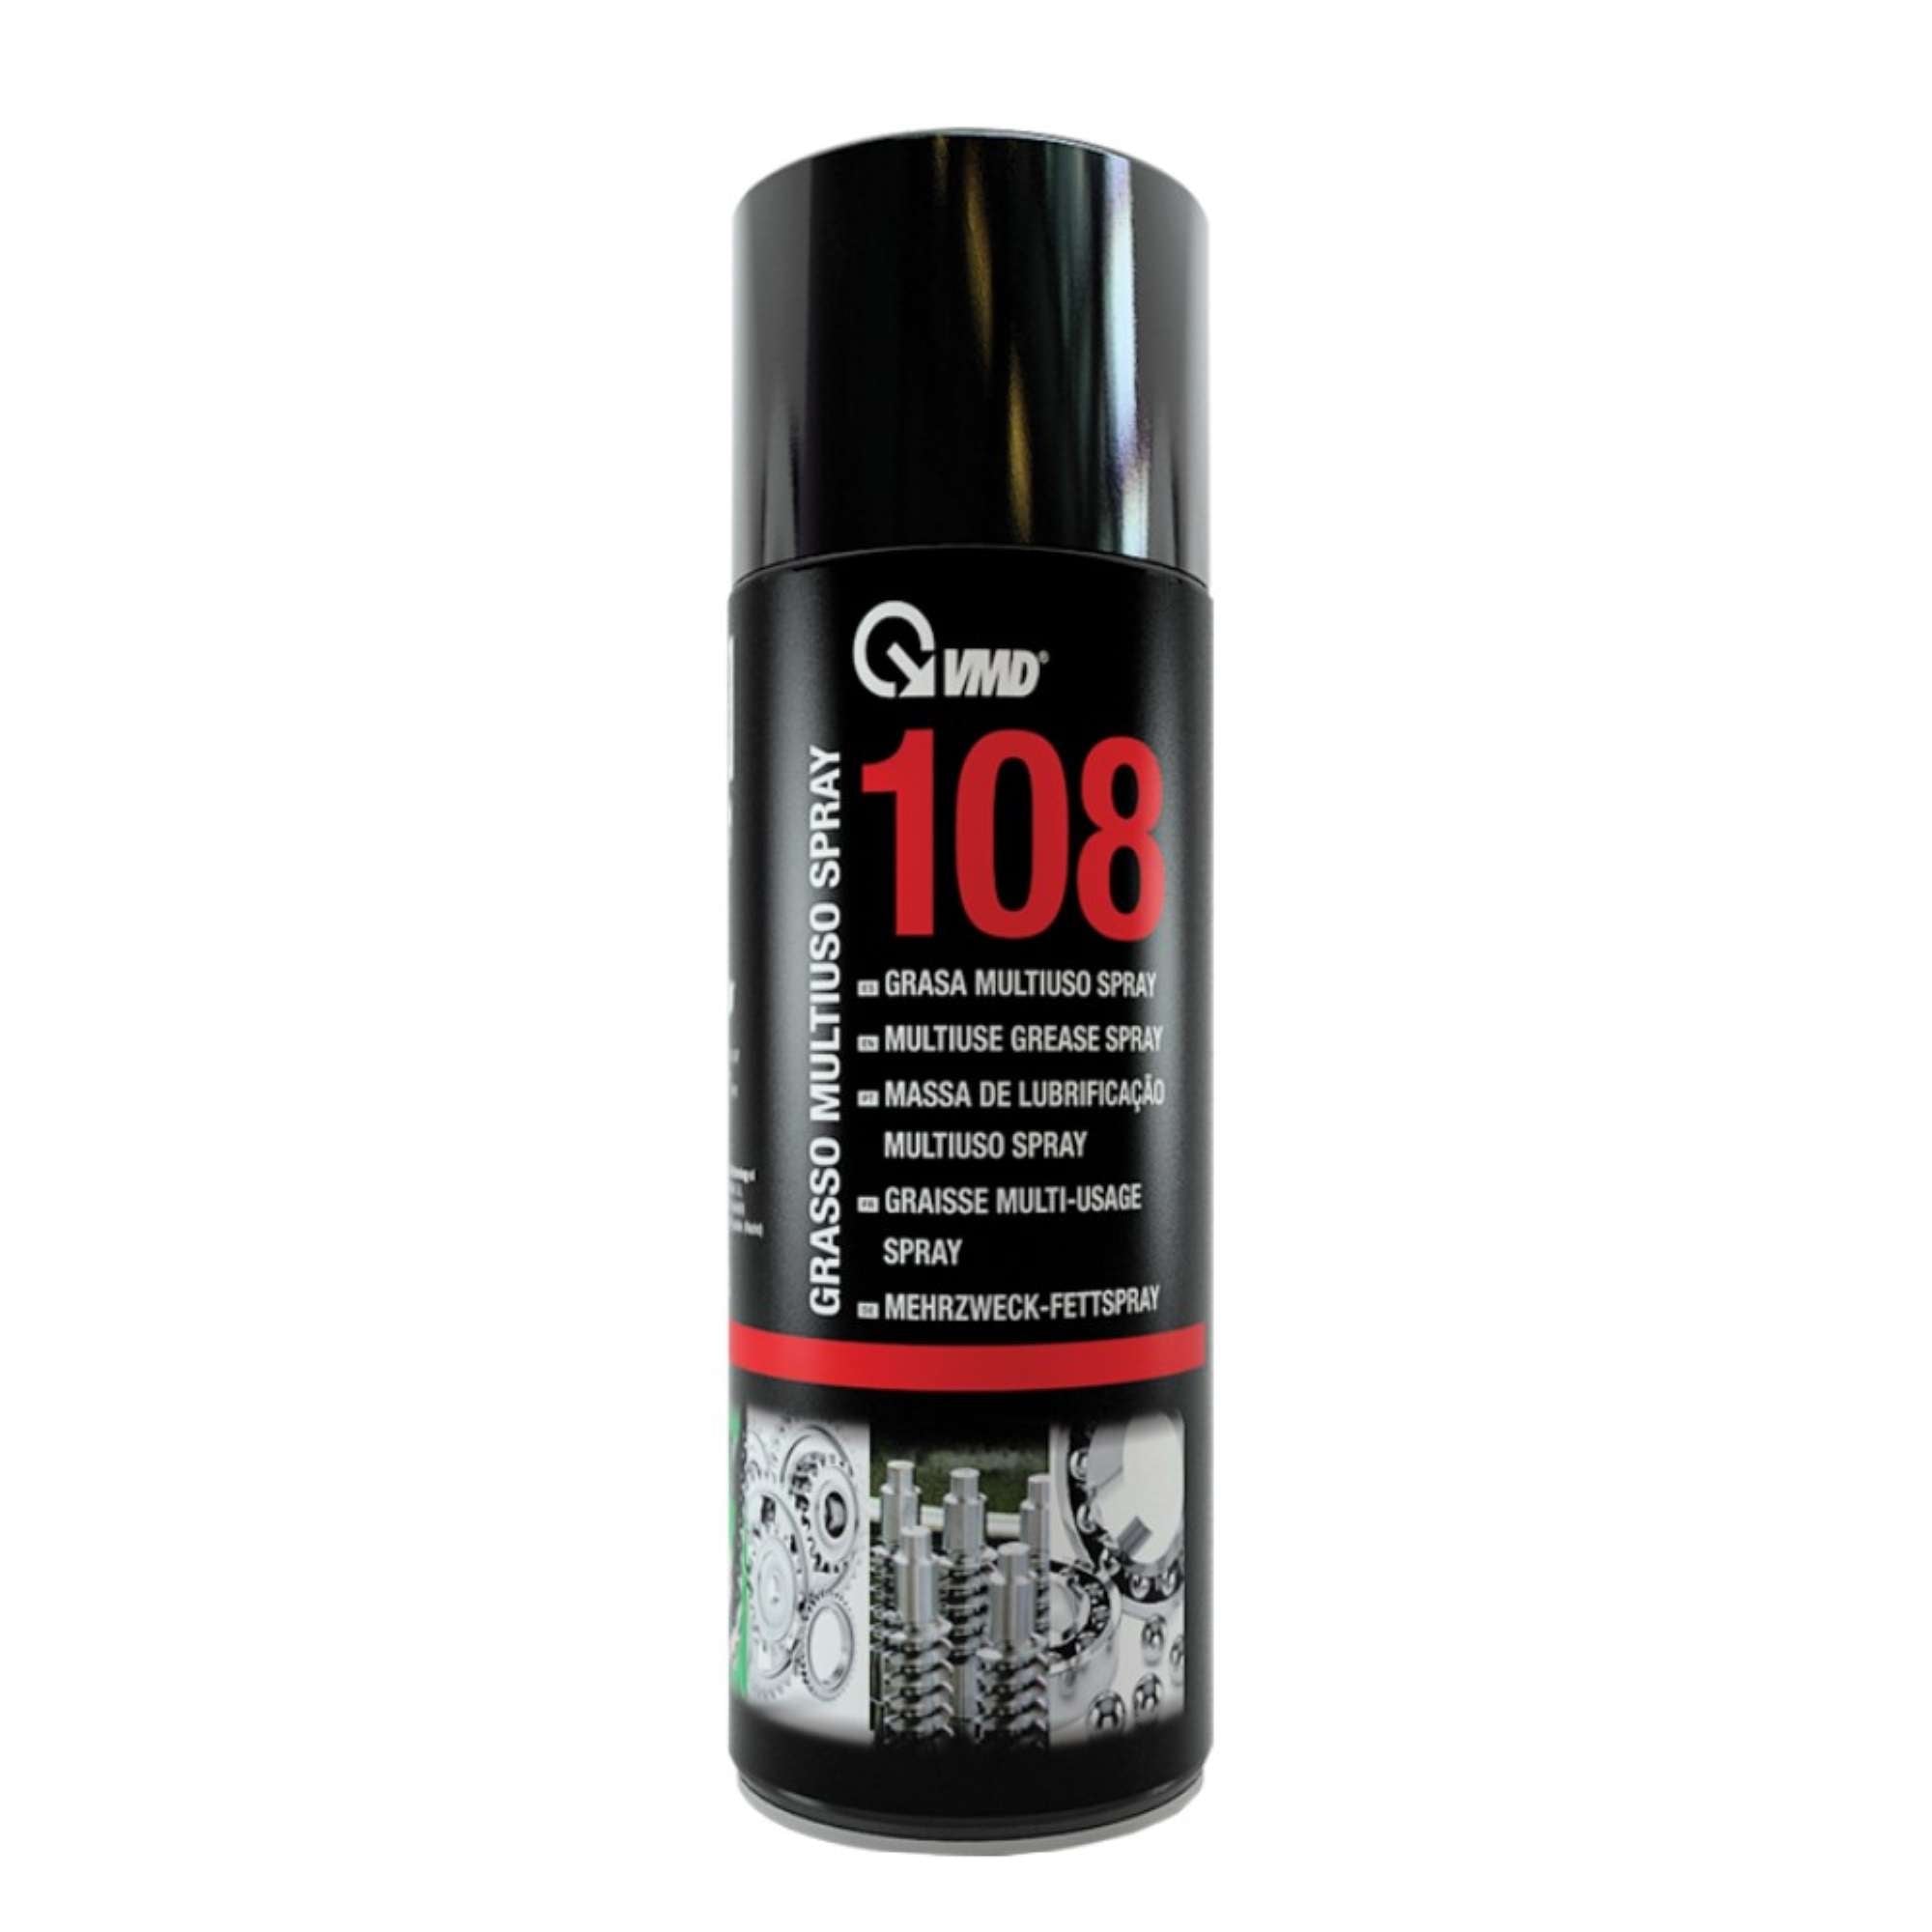 Multipurpose Spray Grease VMD 108